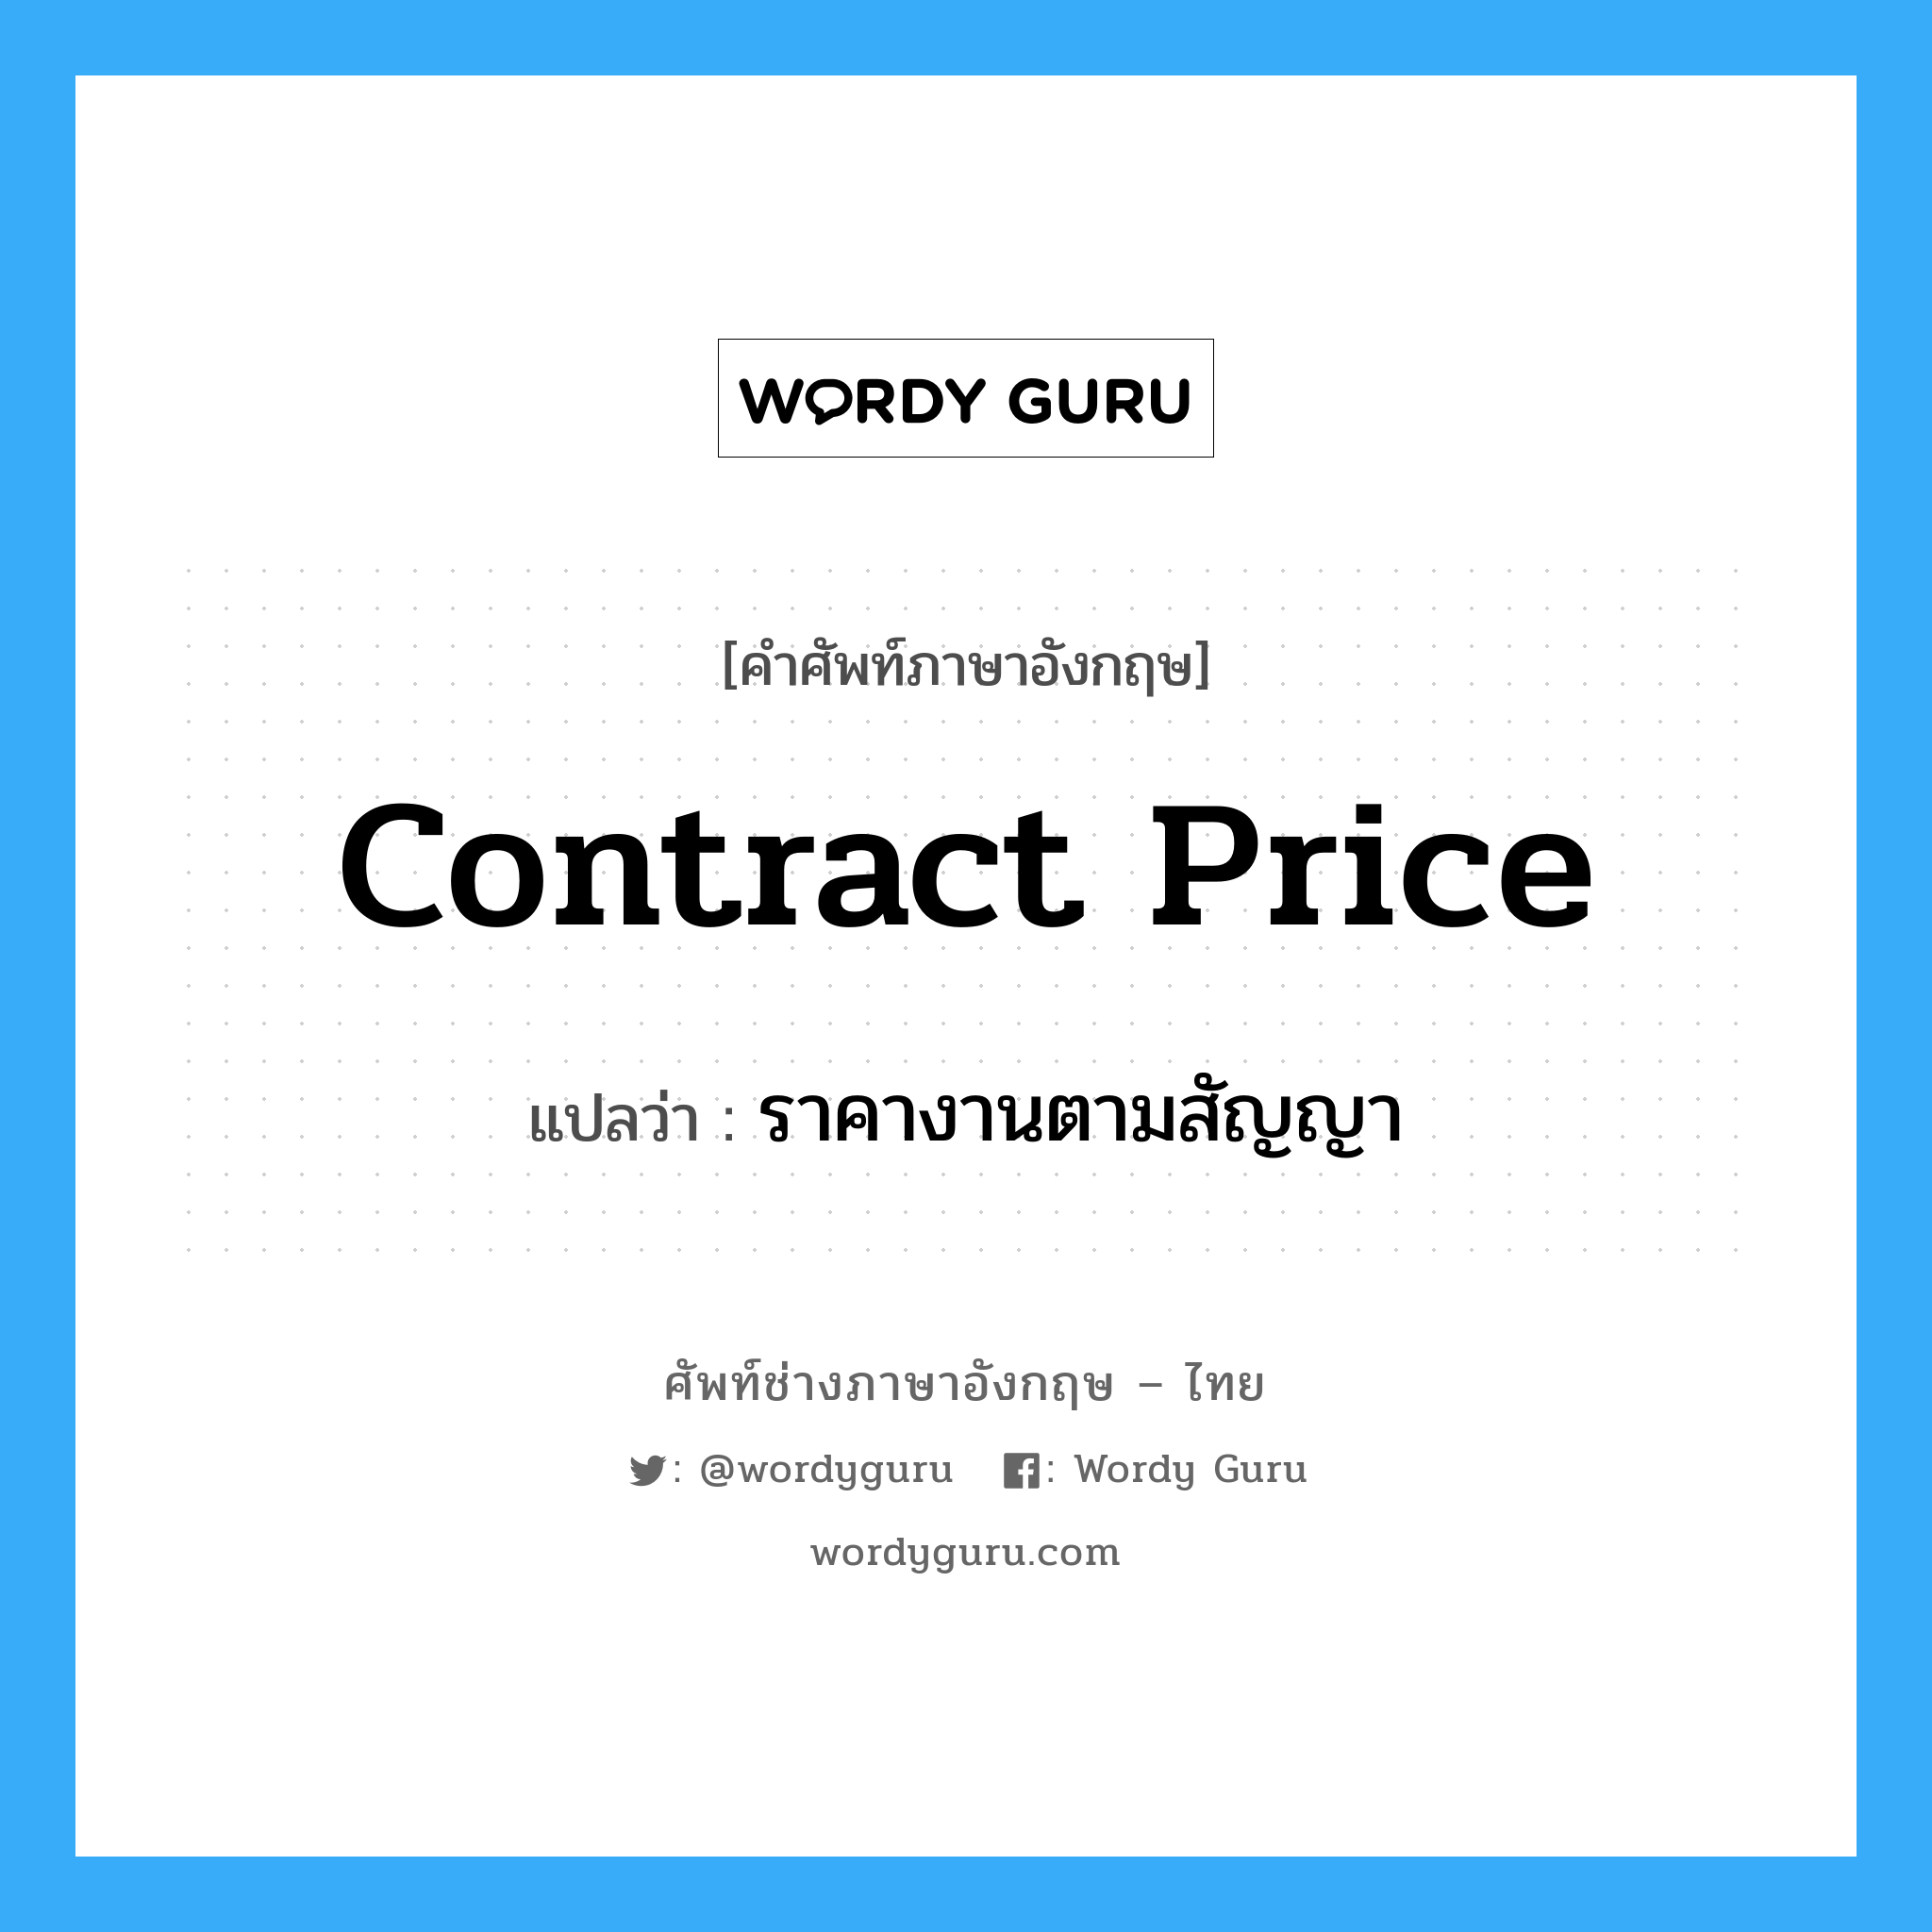 Contract Price แปลว่า?, คำศัพท์ช่างภาษาอังกฤษ - ไทย Contract Price คำศัพท์ภาษาอังกฤษ Contract Price แปลว่า ราคางานตามสัญญา